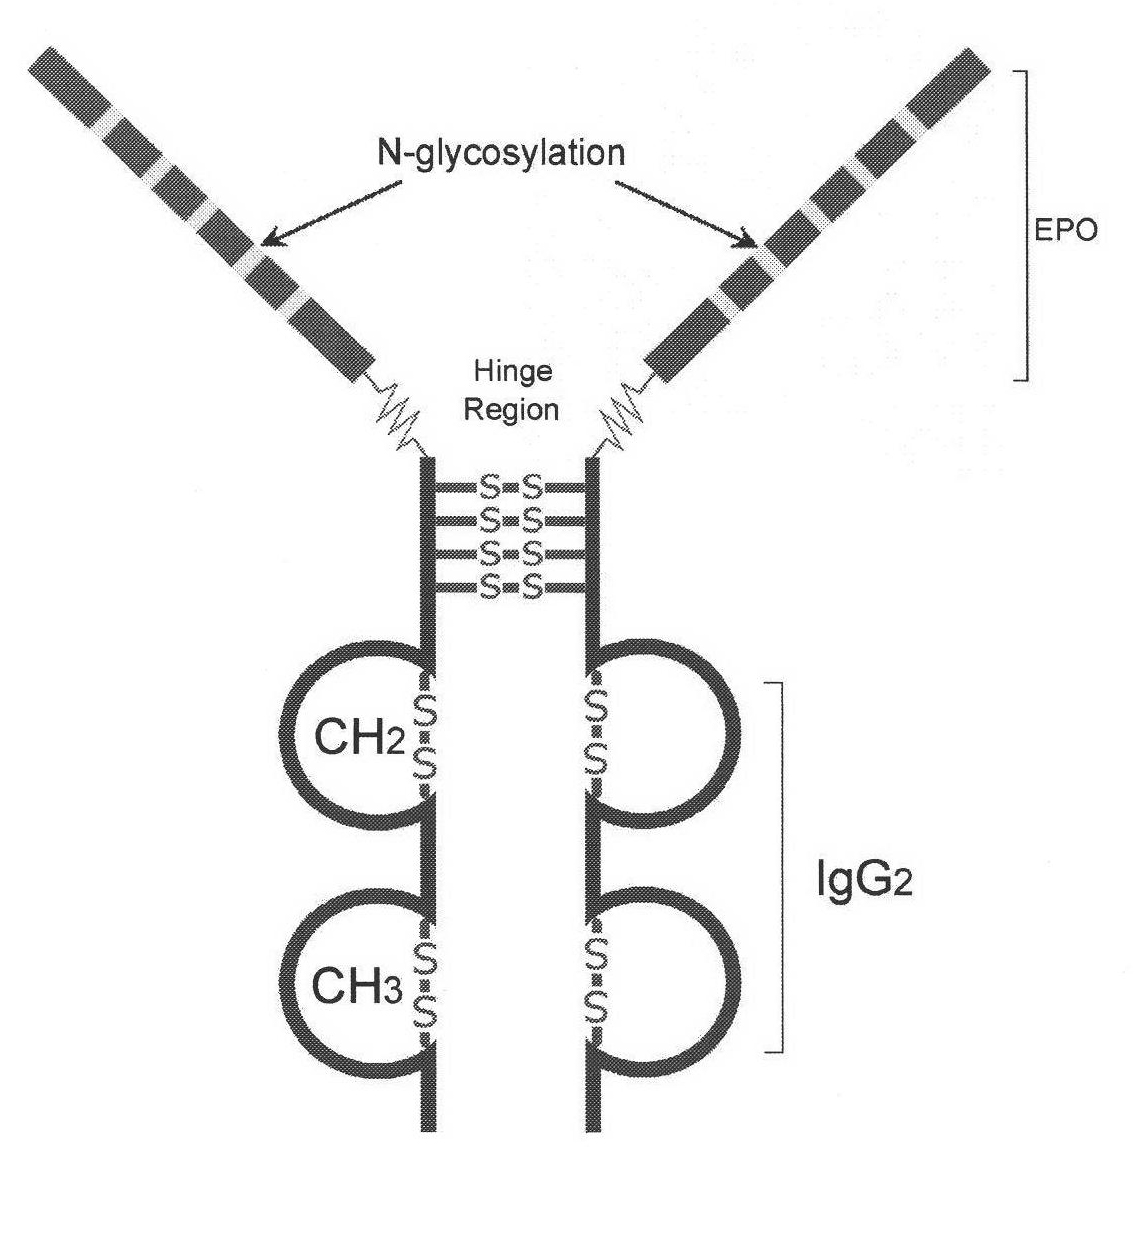 Novel high-glycosylation erythropoietin immune fusion protein